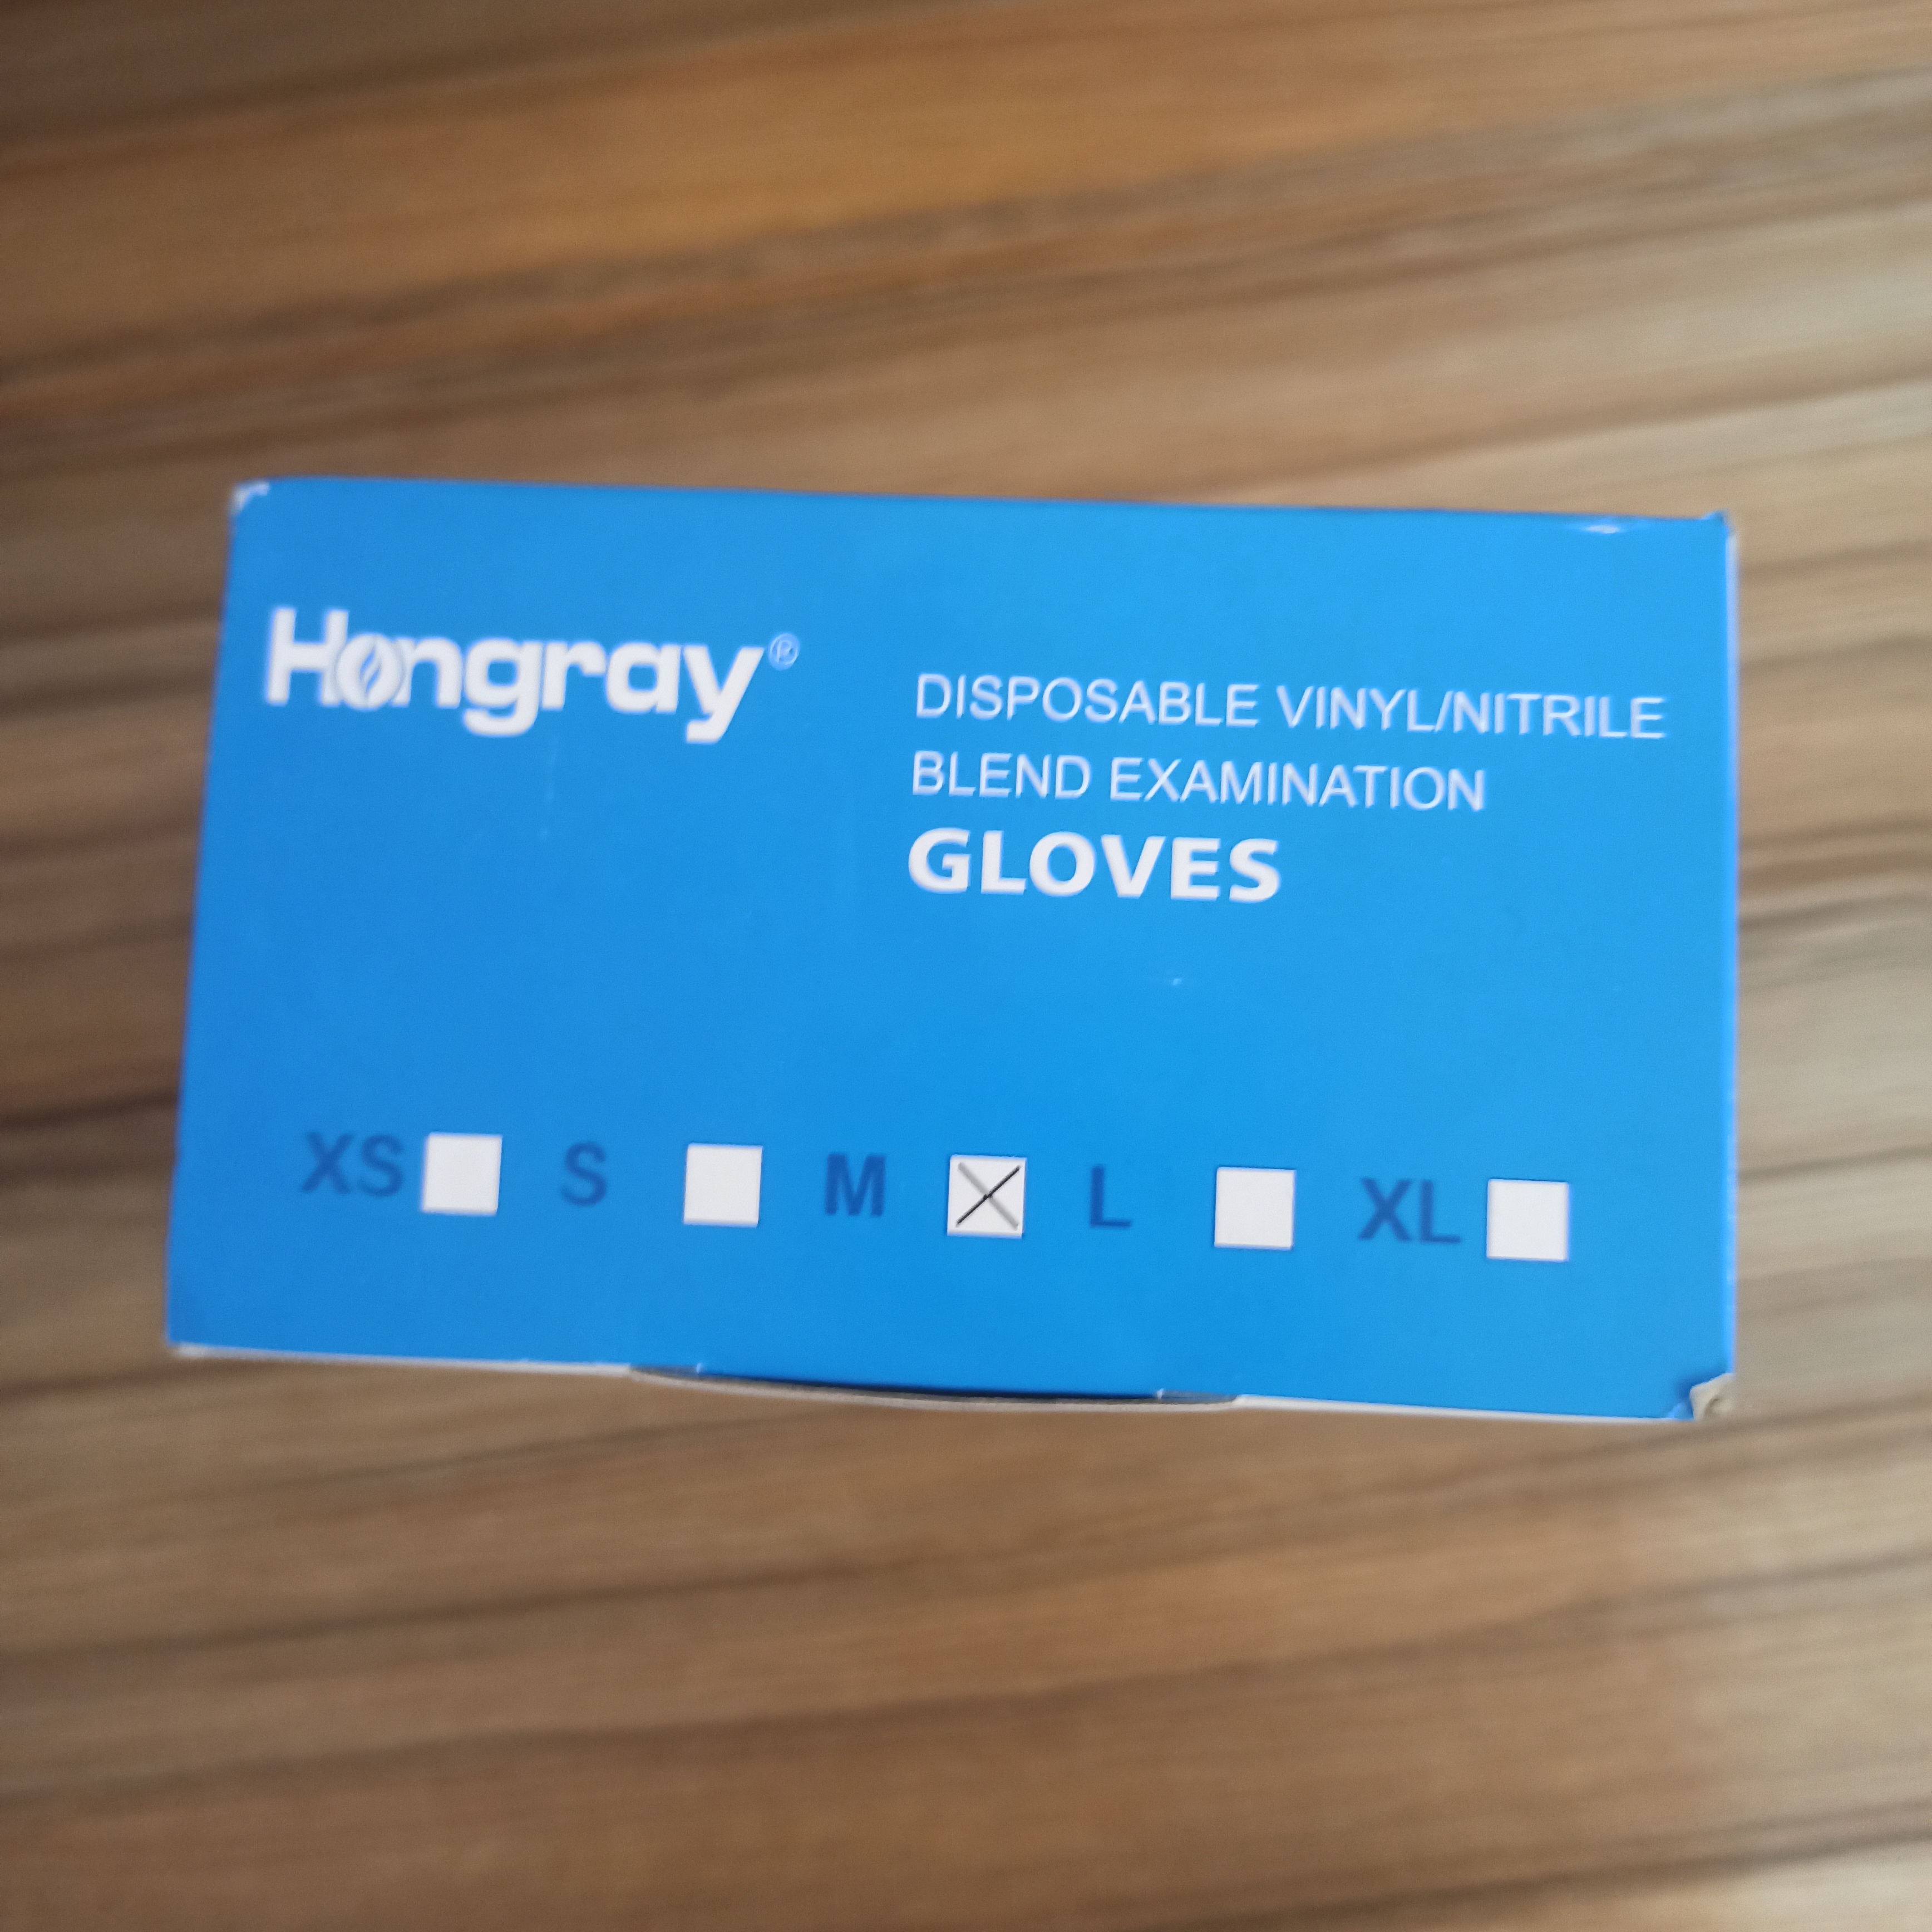 hongray medical vinyl/nittrile blends disposable exam gloves ready stock FOB China